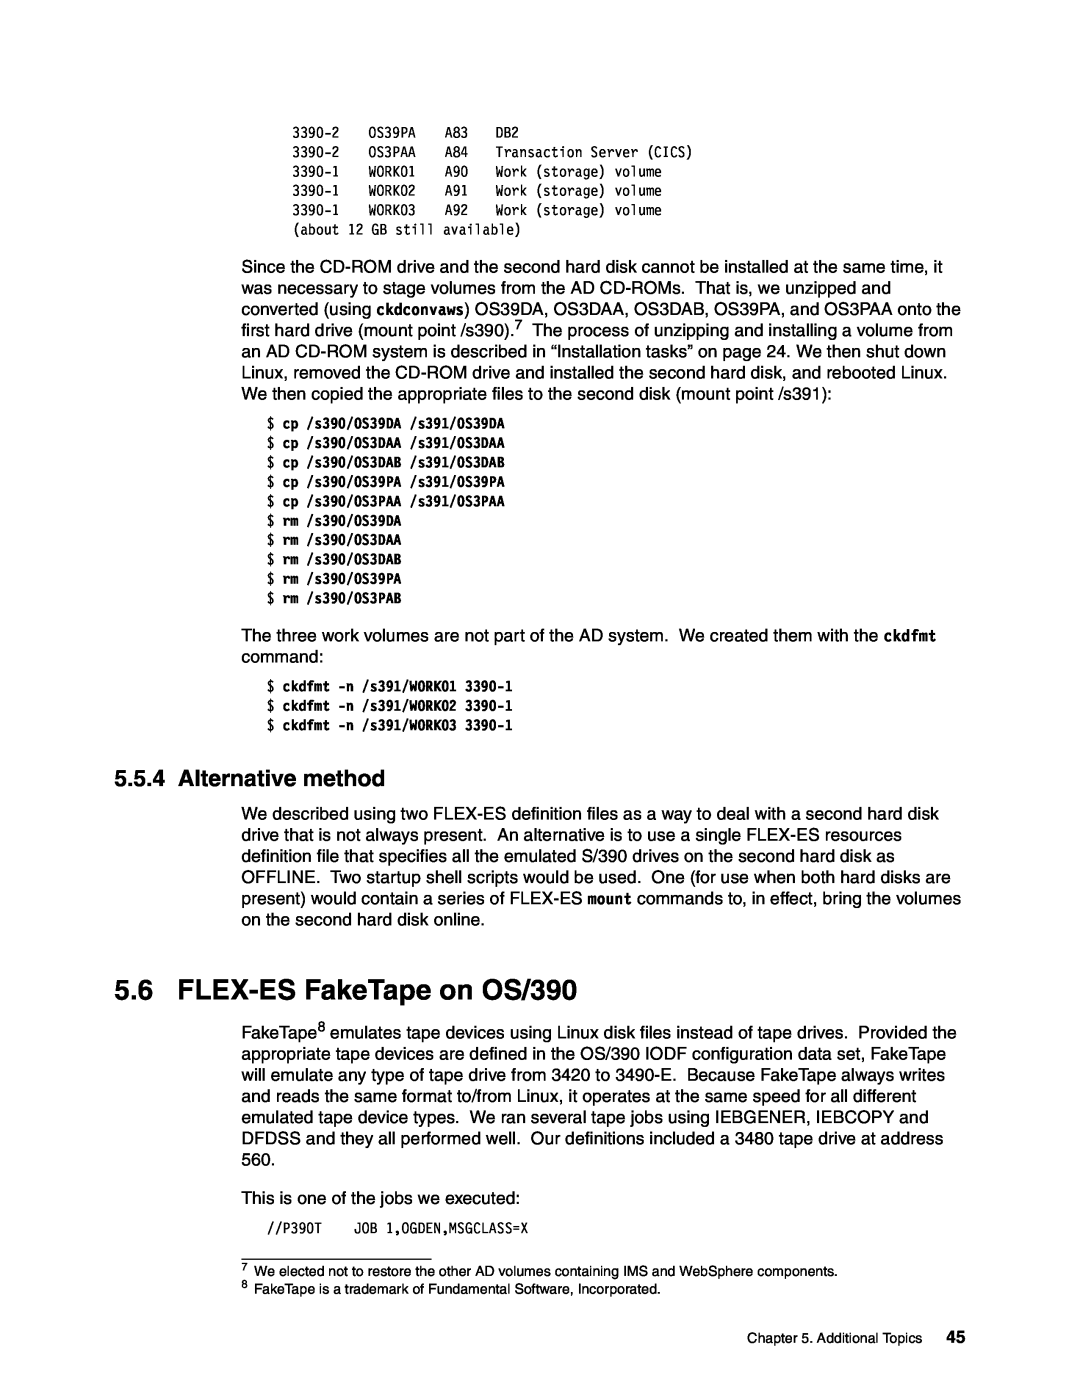 IBM s/390 manual FLEX-ES FakeTape on OS/390, Alternative method 